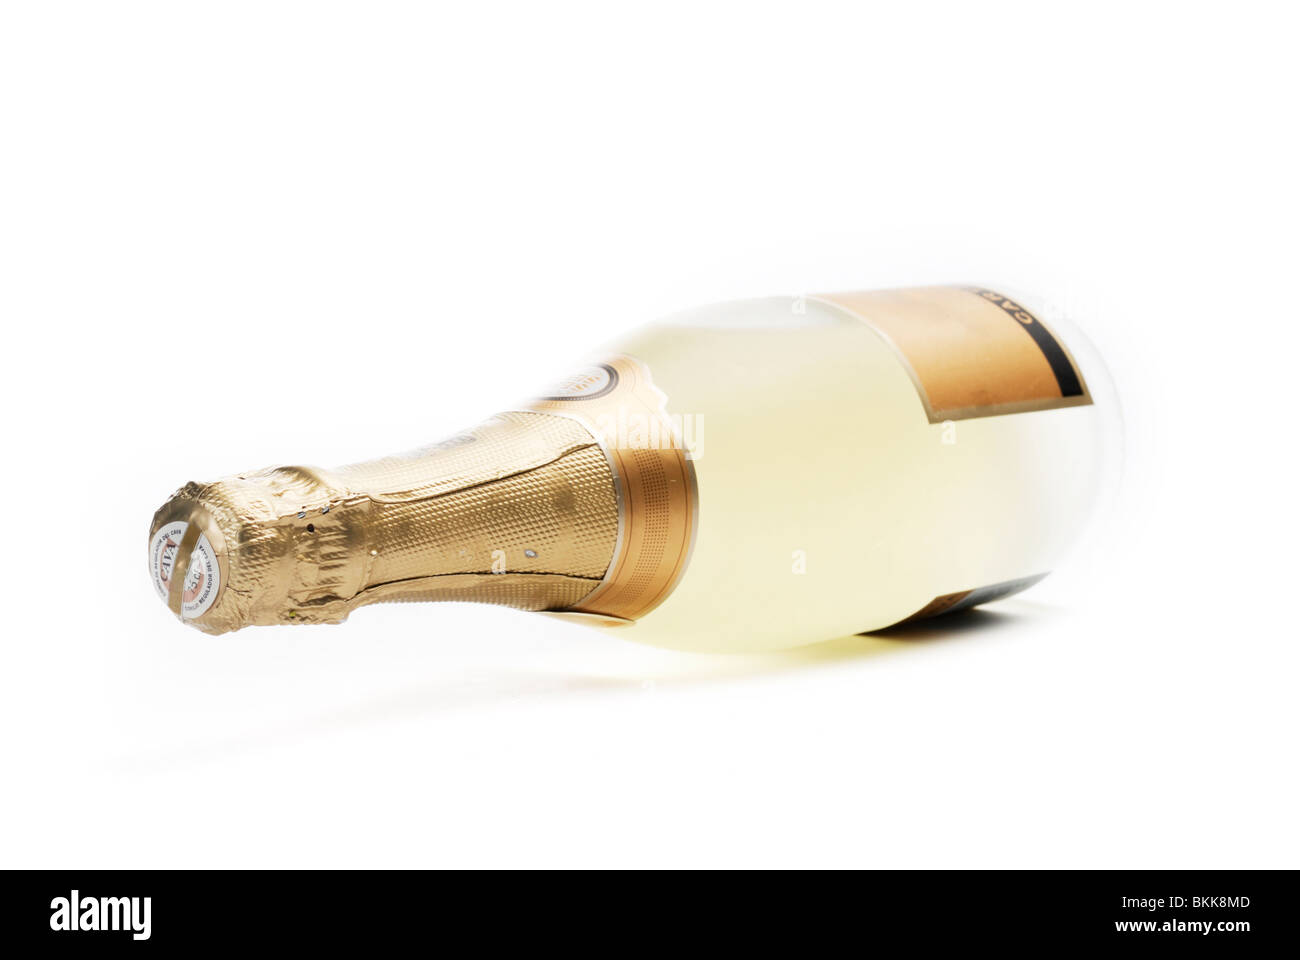 Sparkling wine bottle cava Stock Photo